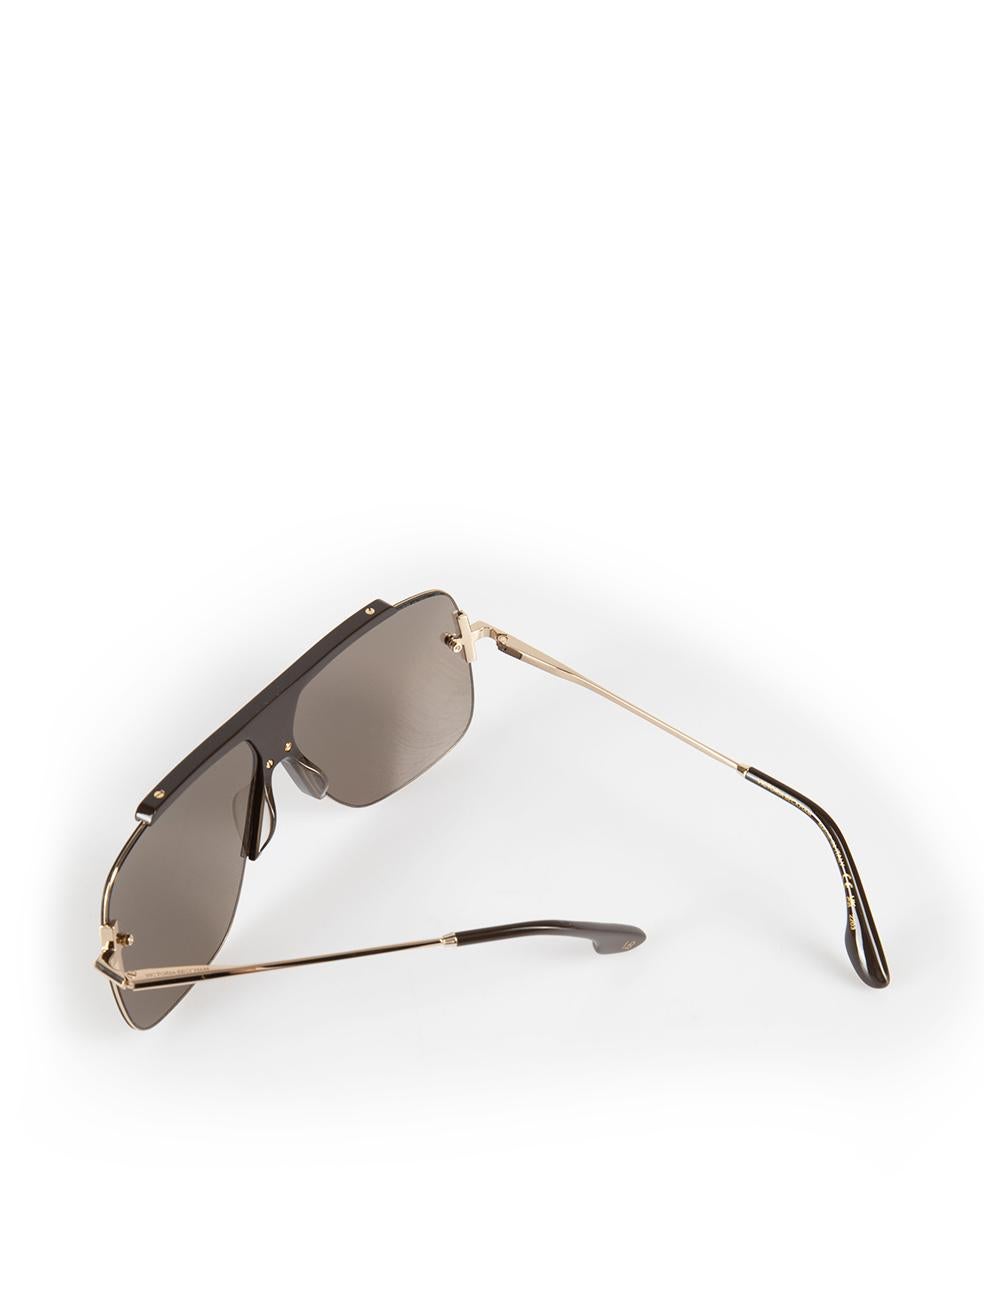 Victoria Beckham Mocha Navigator Sunglasses For Sale 3